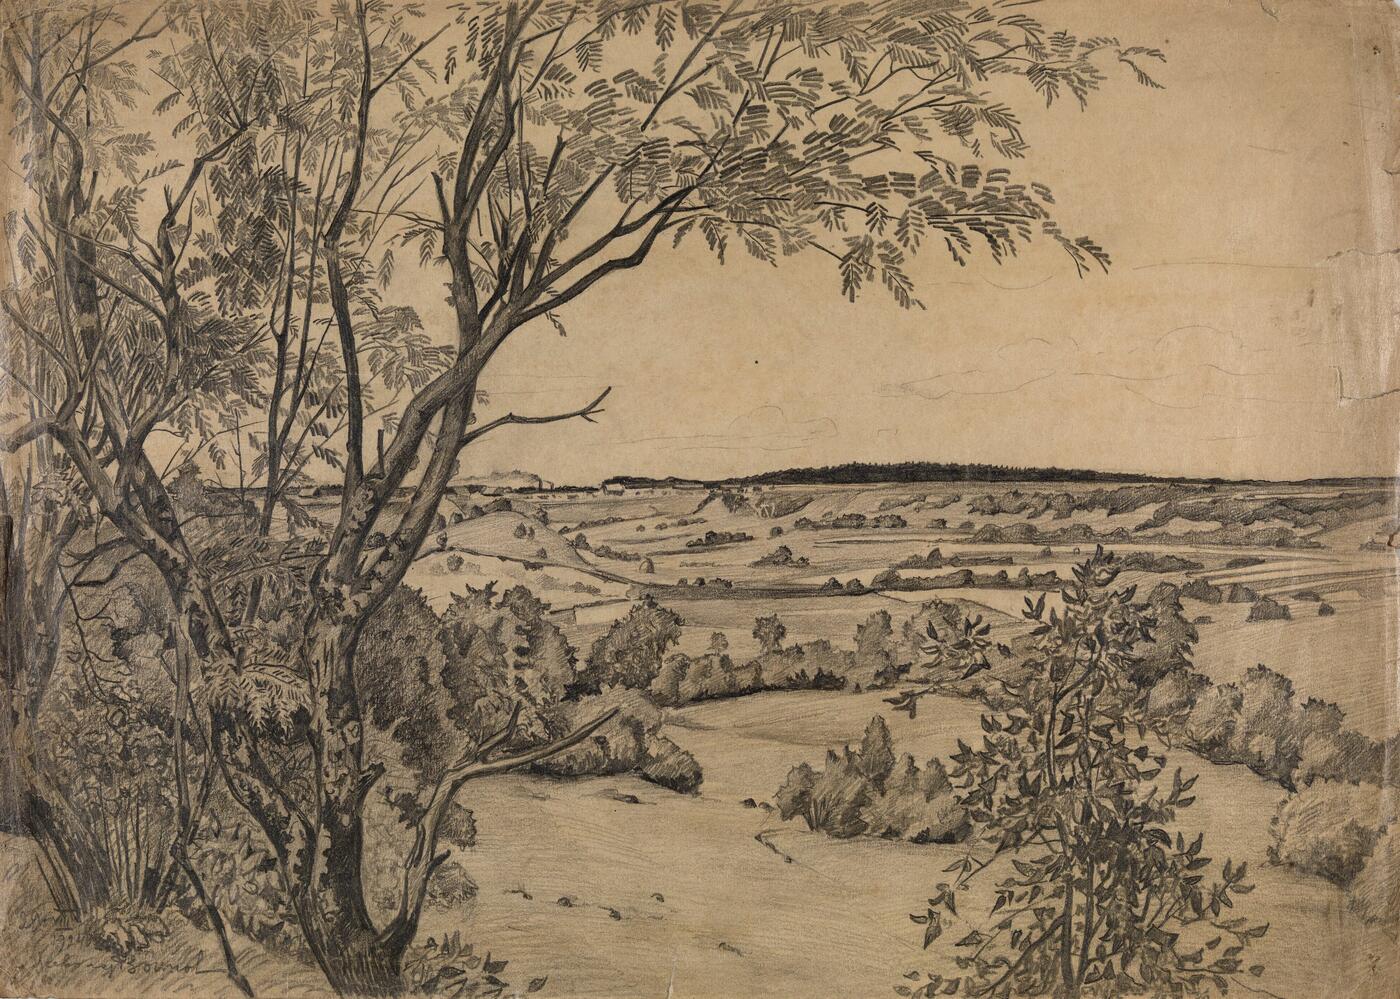 Landscape, Jukki